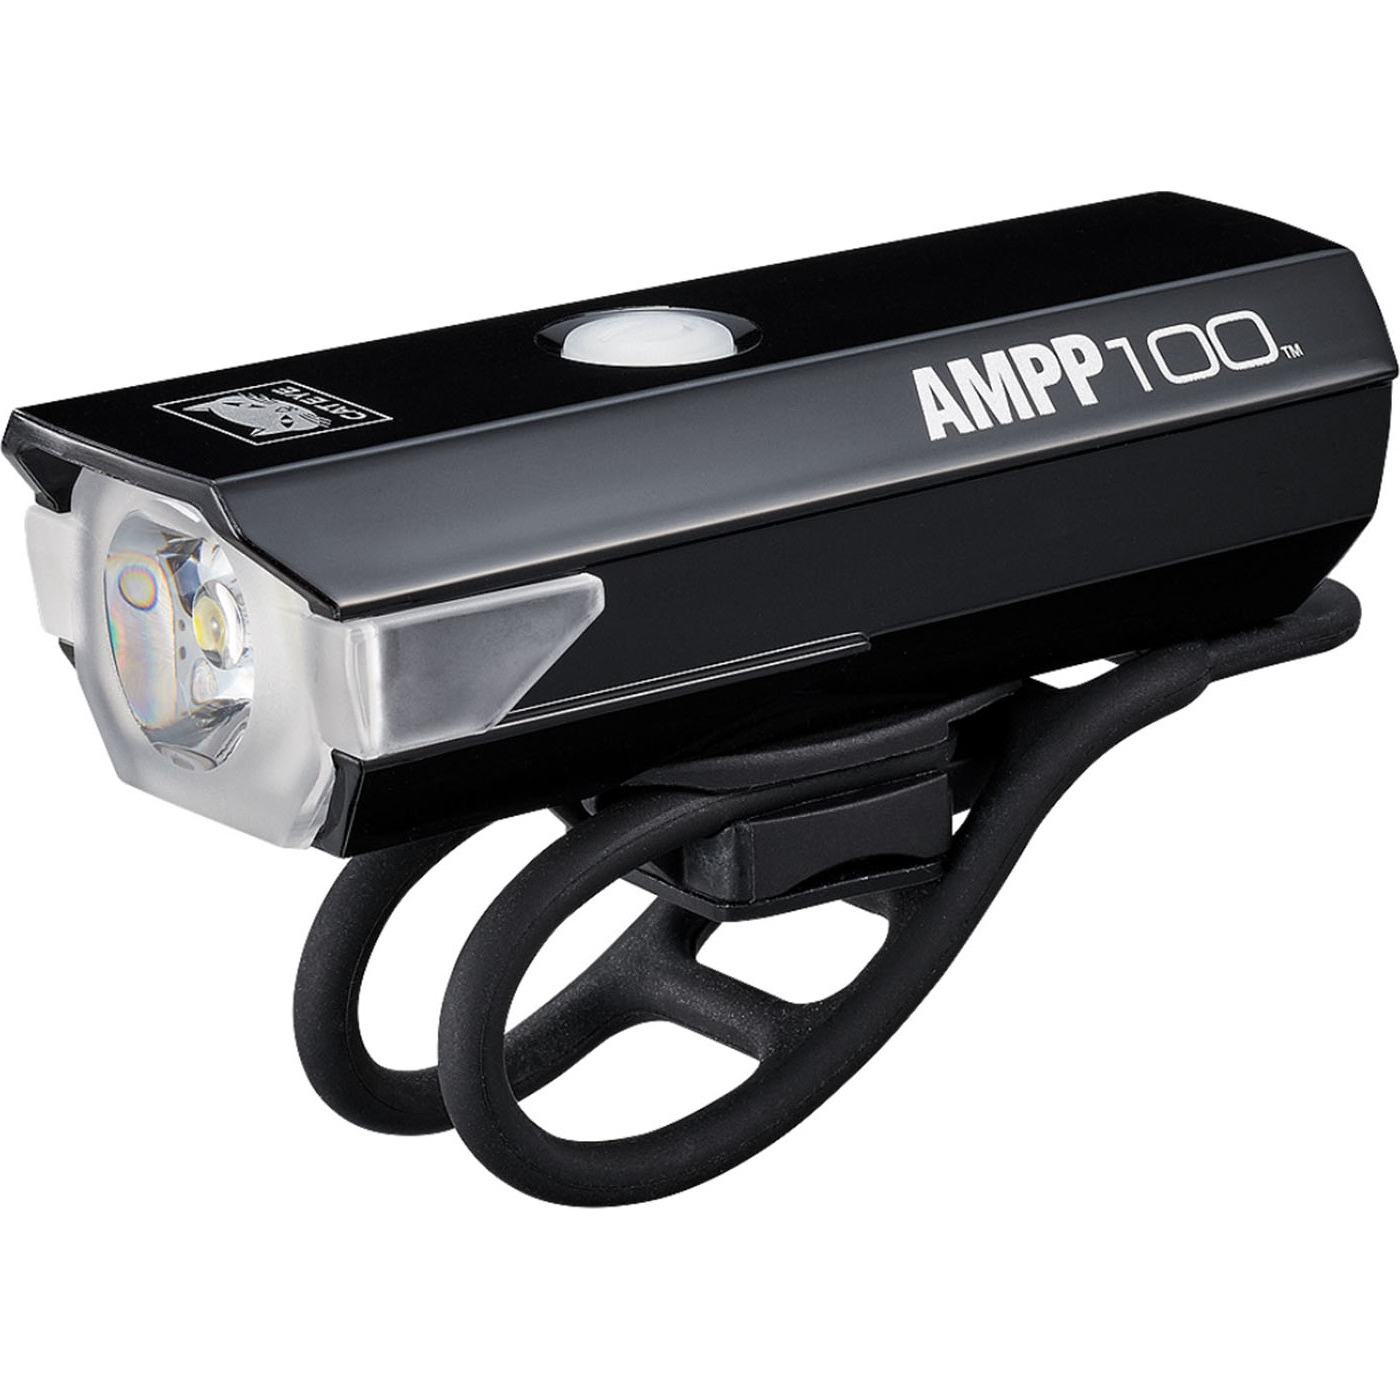 Cateye 充電車燈 AMPP 100 流明 HL-EL041RC